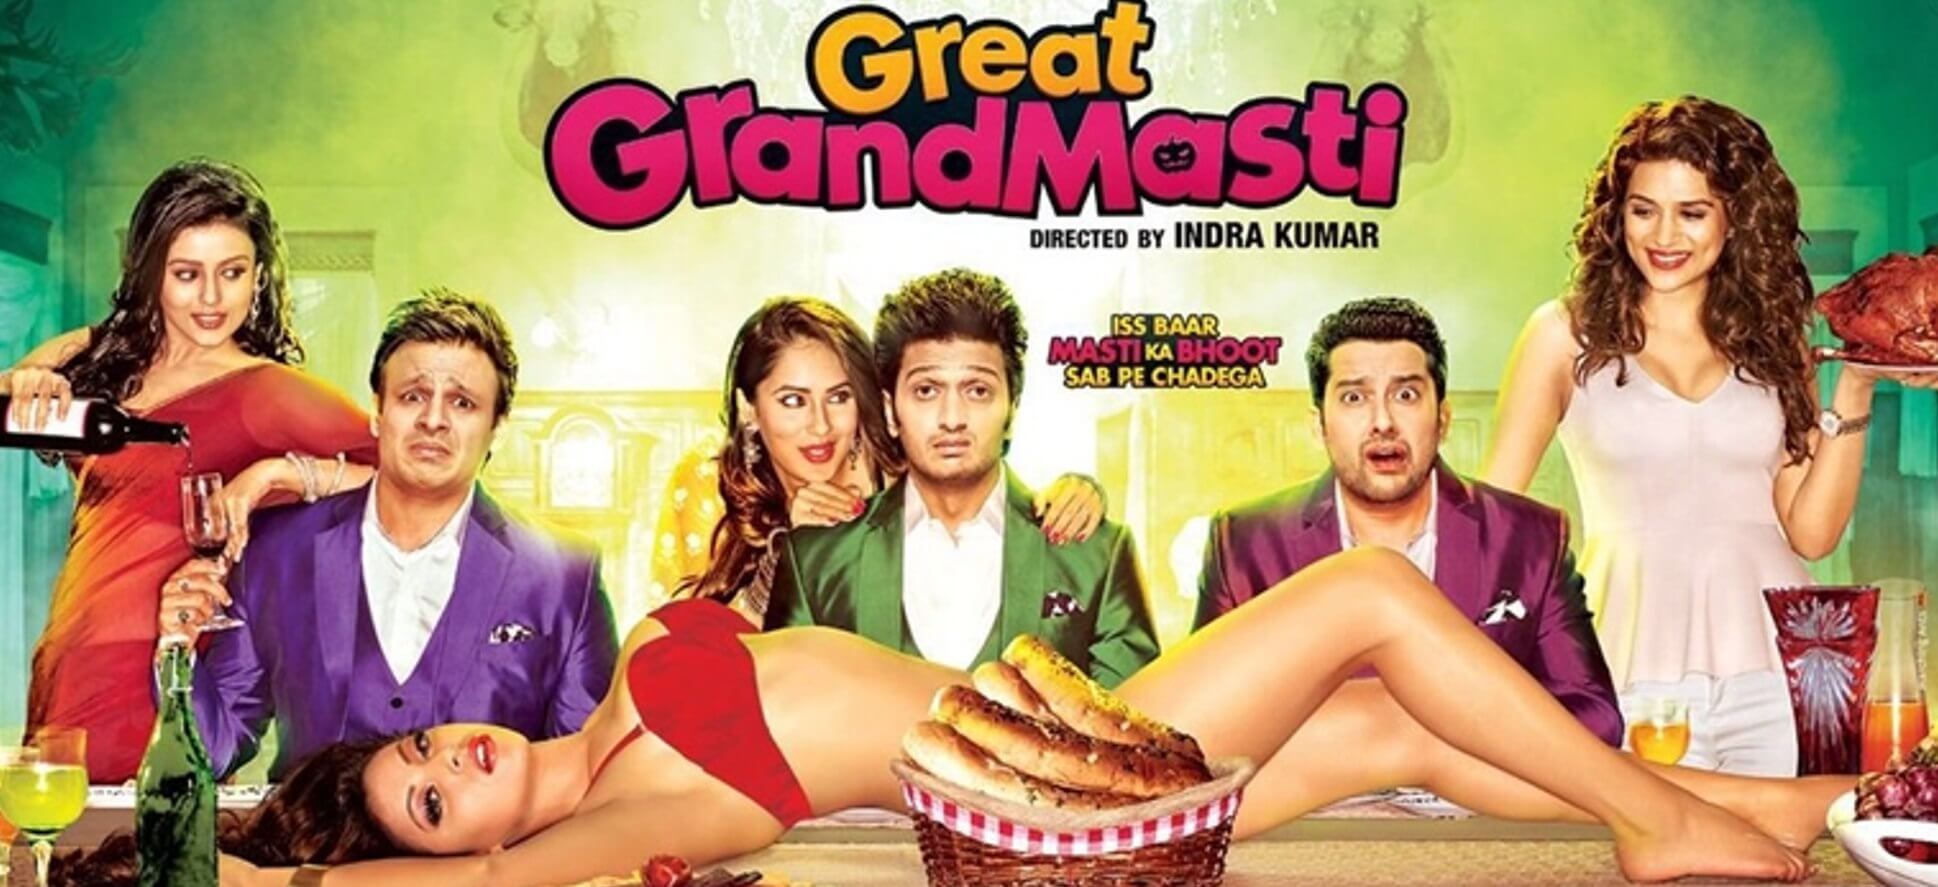 Great Grand Masti Movie Reviews and Ratings Urvashi Rautlea Hot